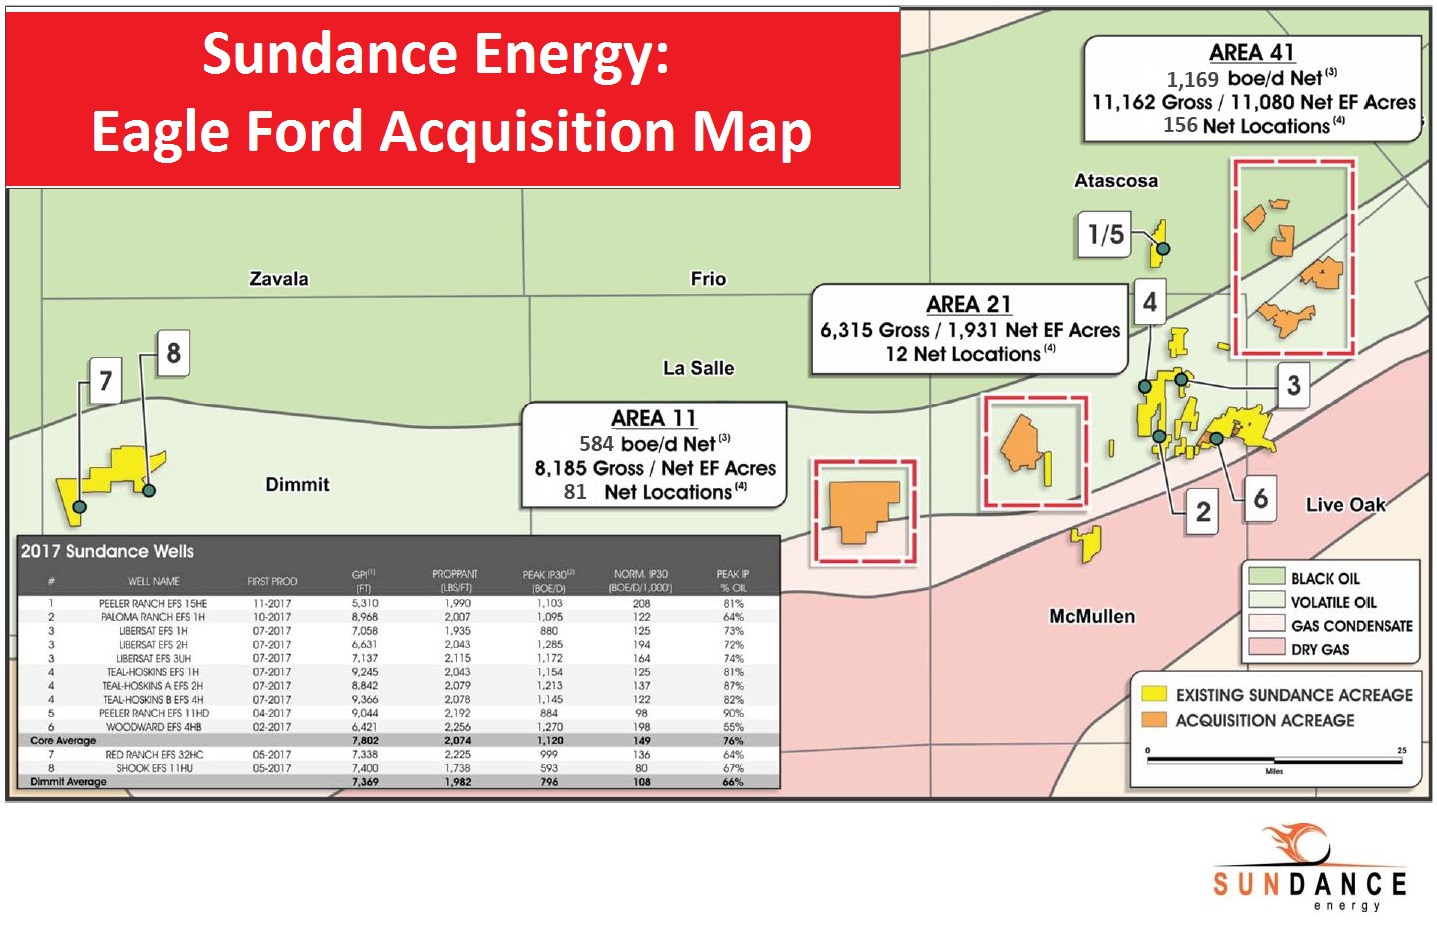 Sundance Energy: Eagle Ford Acquisition Map